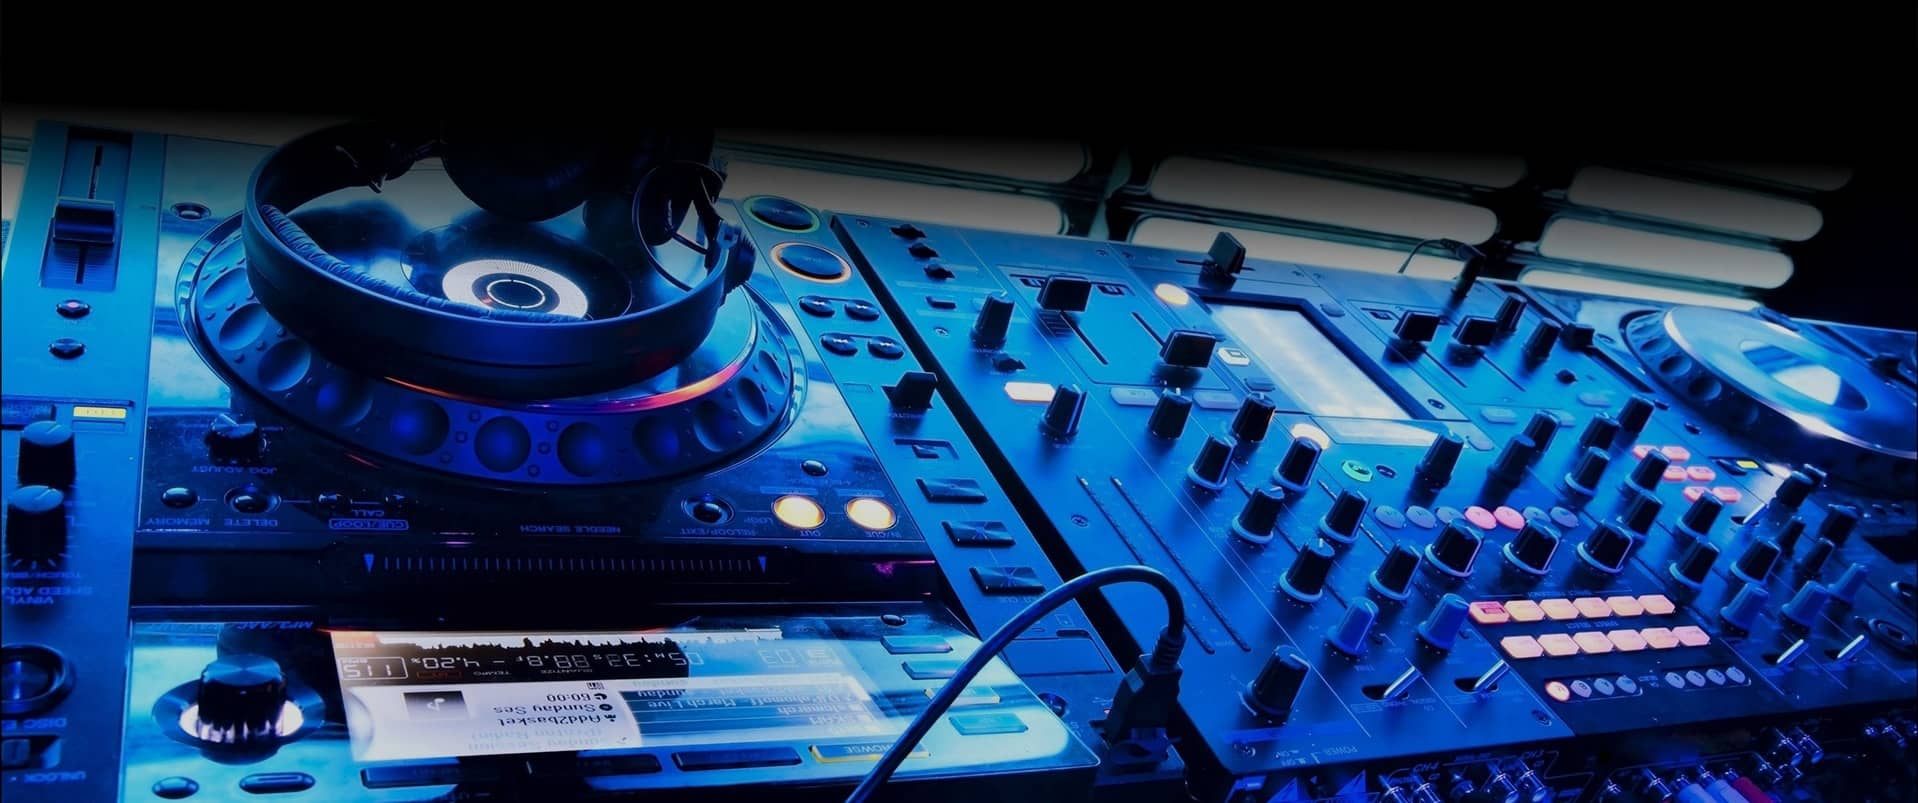 Fully Custom Dry Radio and DJ Drops - Female Voice - DJ Drops 24/7